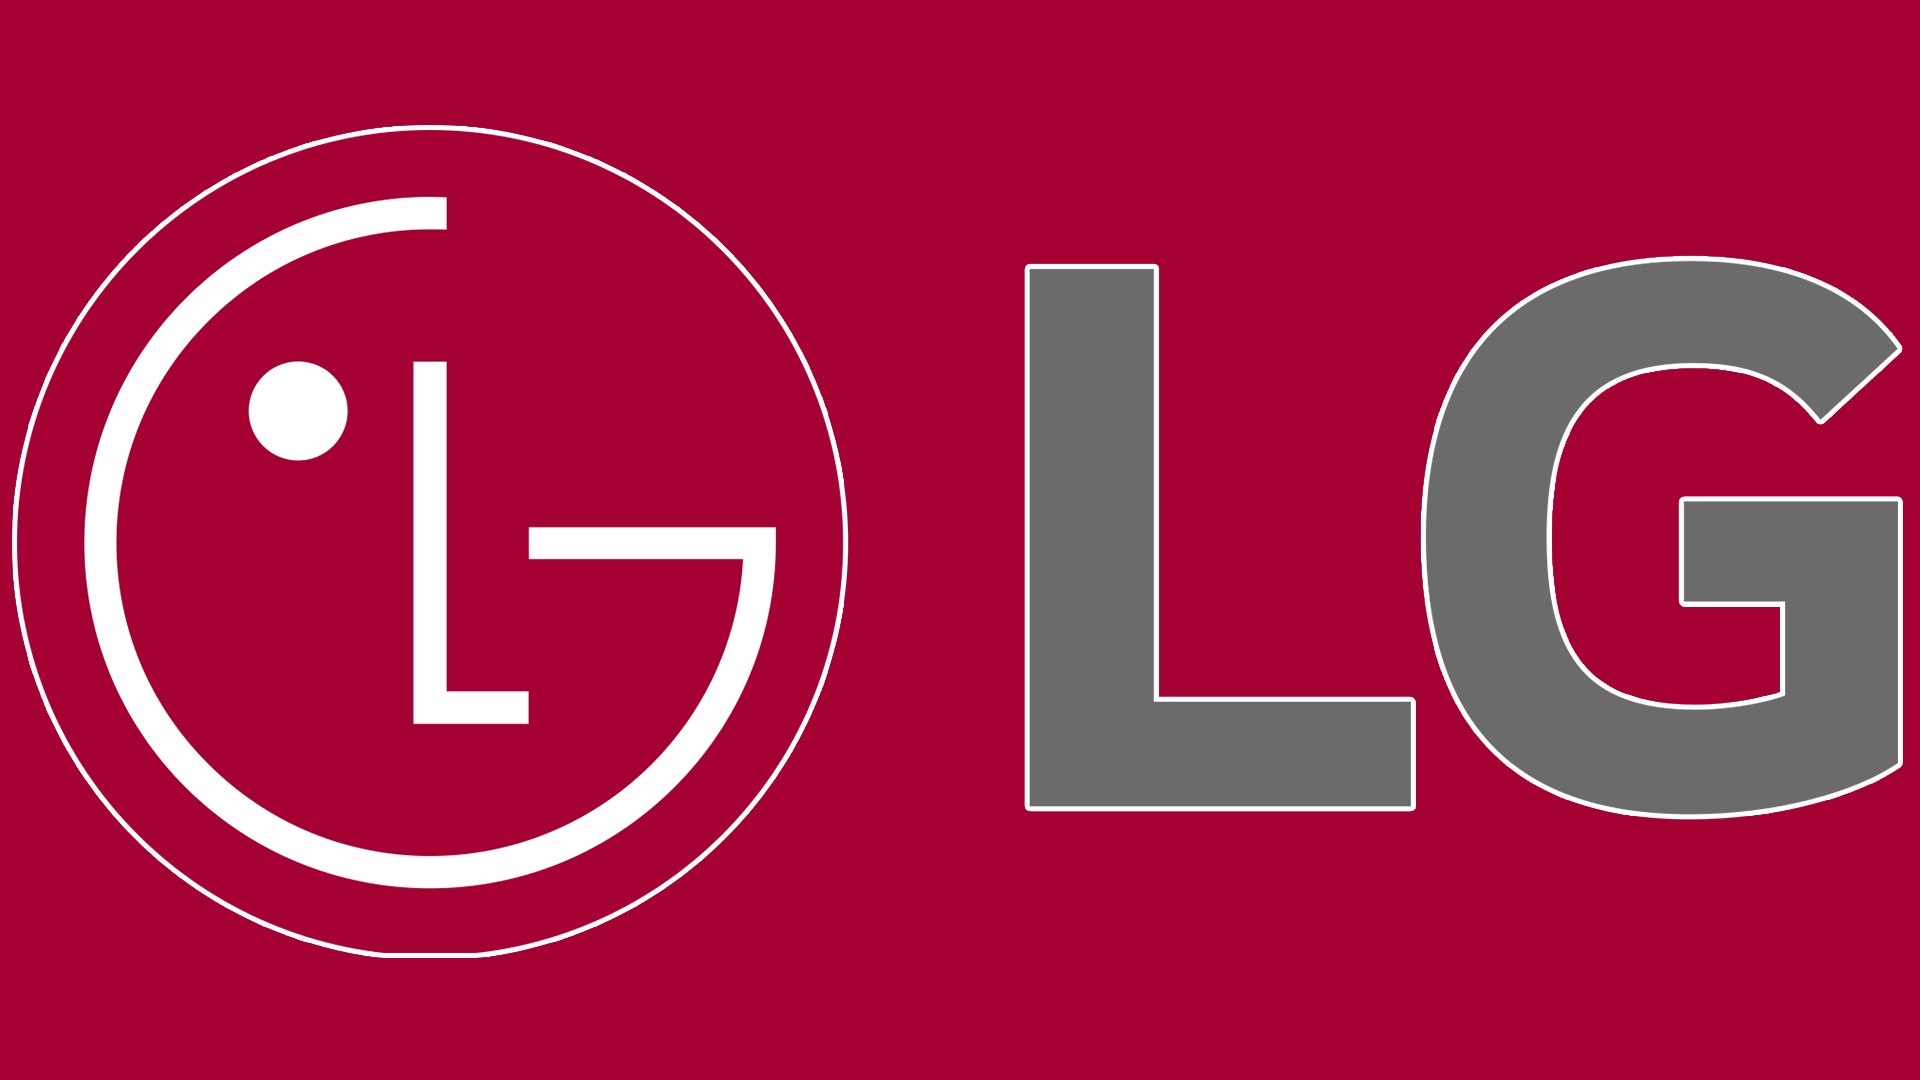 Lg products. LG логотип старый. Концепт логотипа LG. LG Эволюция. Эволюция логотипа LG.